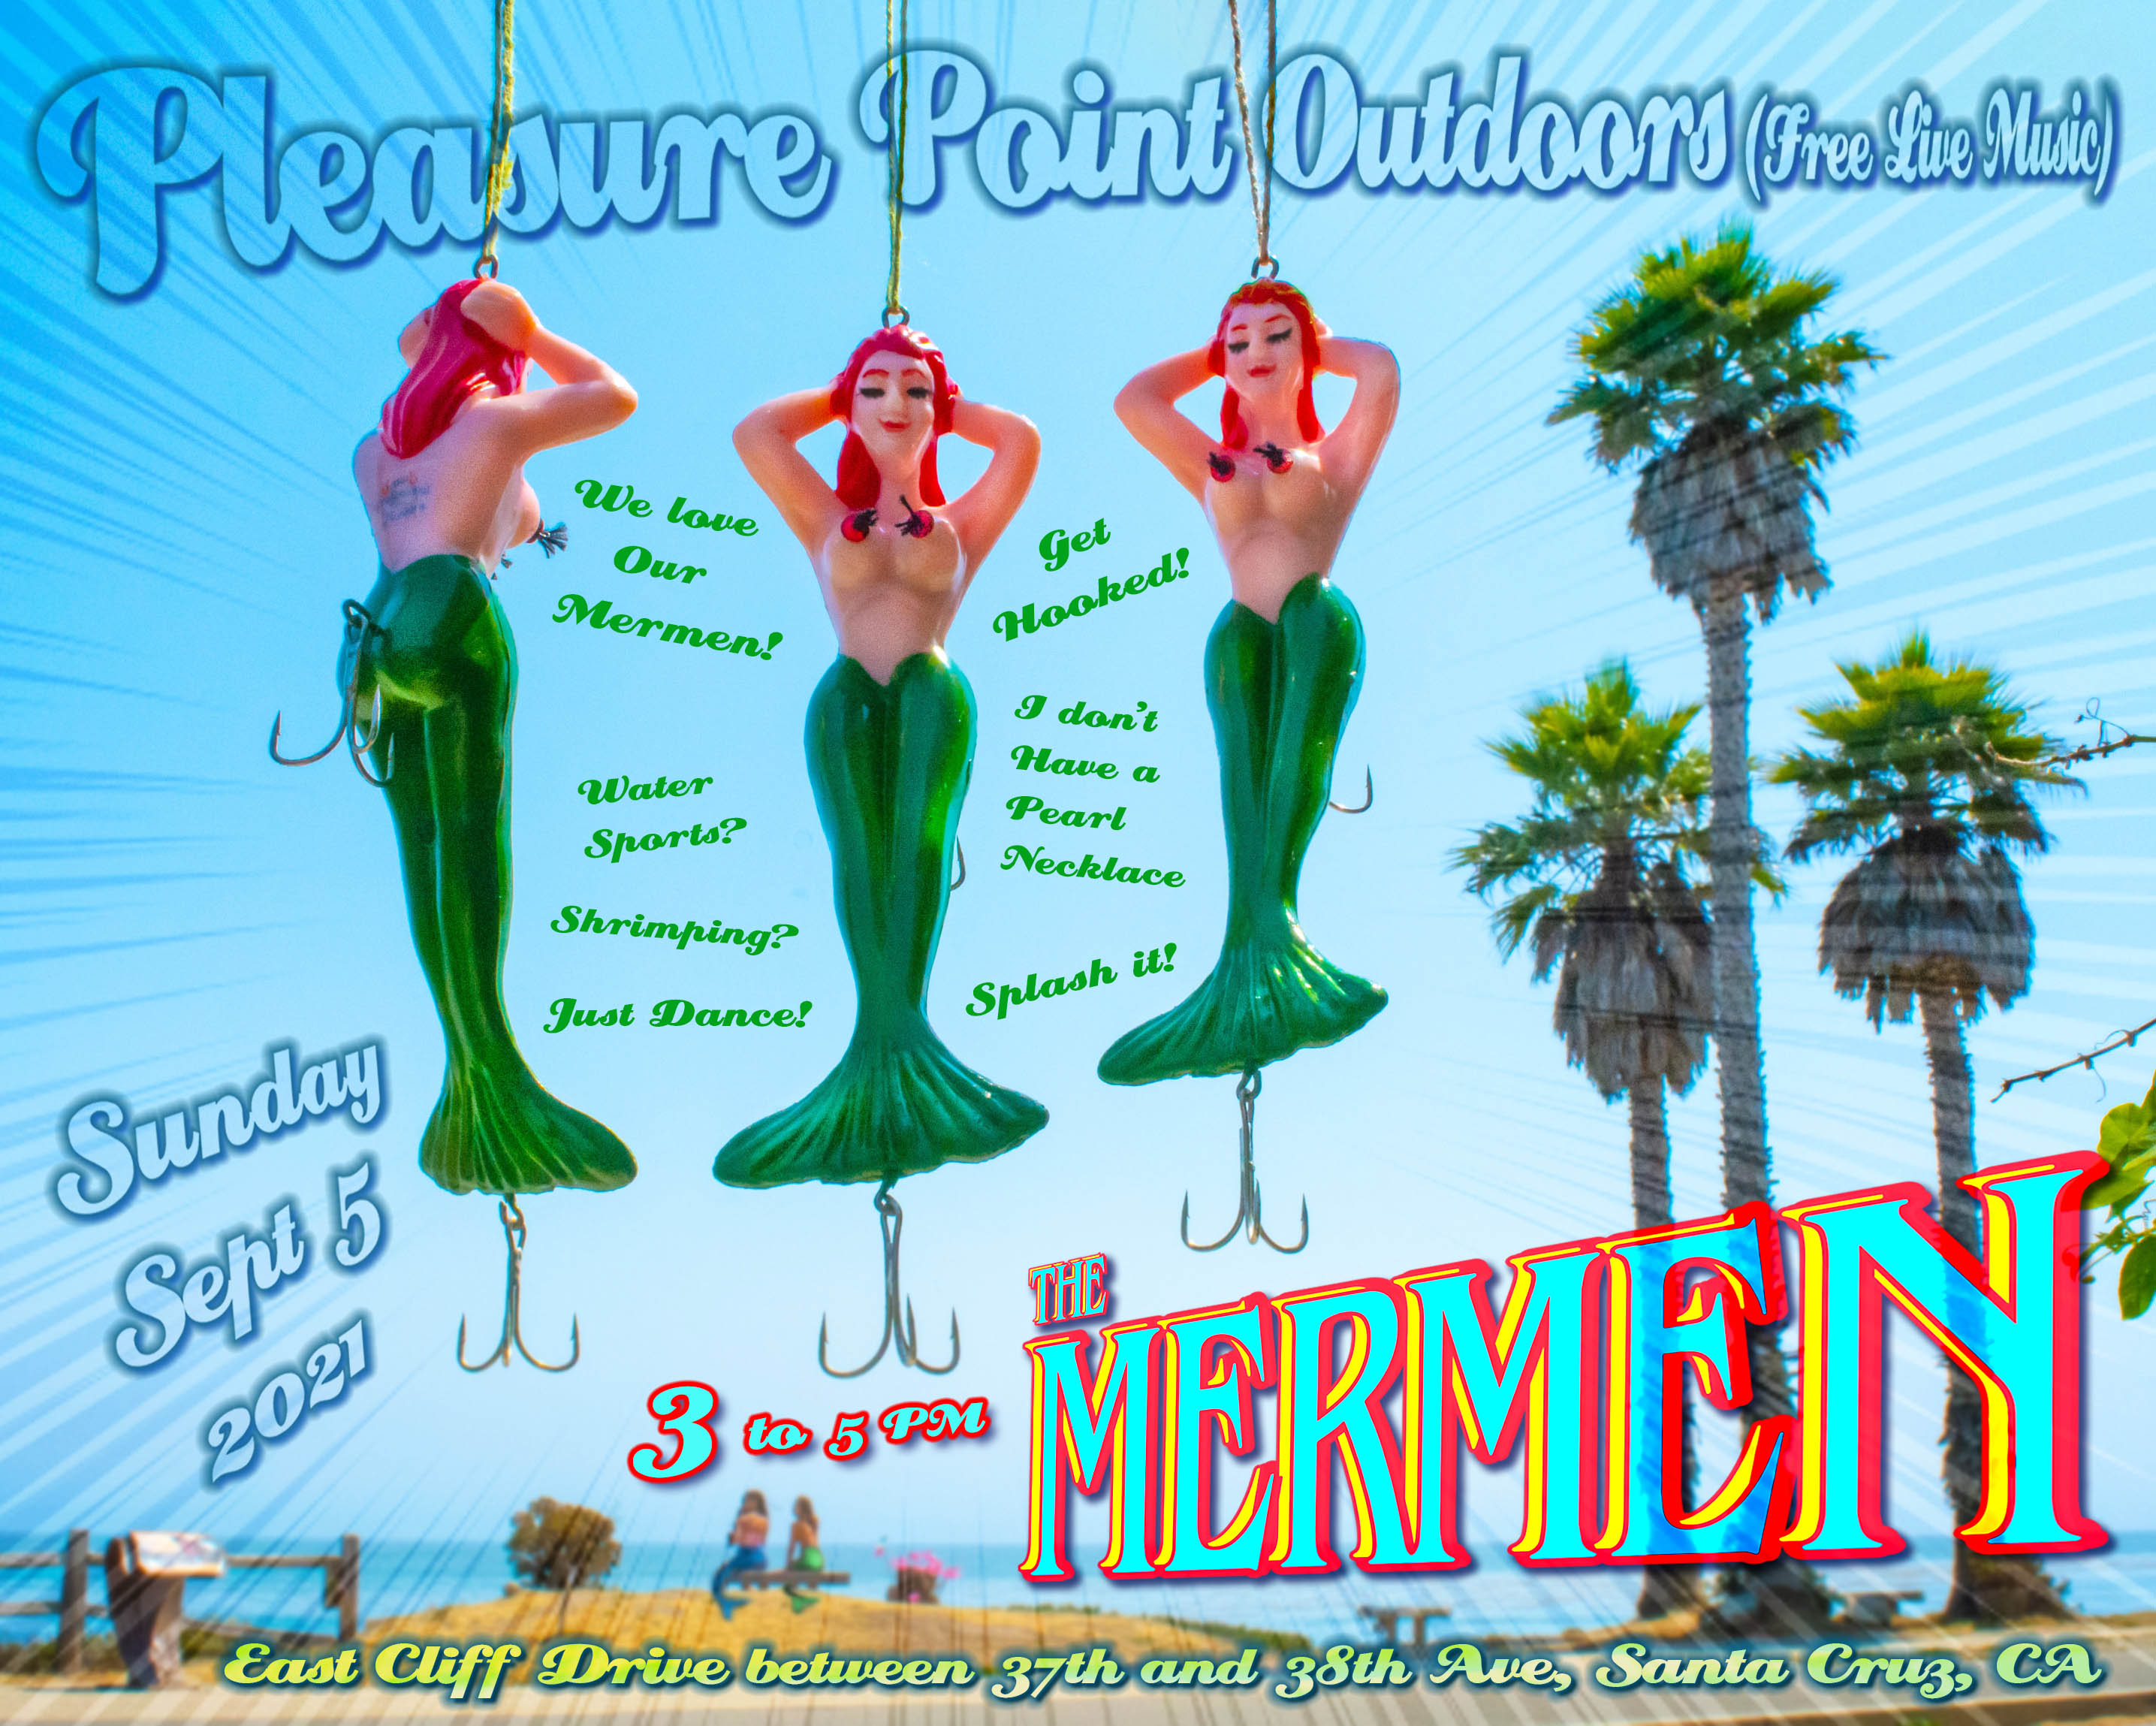 20210905 The Mermen at Pleasure Point Outdoors, Santa Cruz, CA